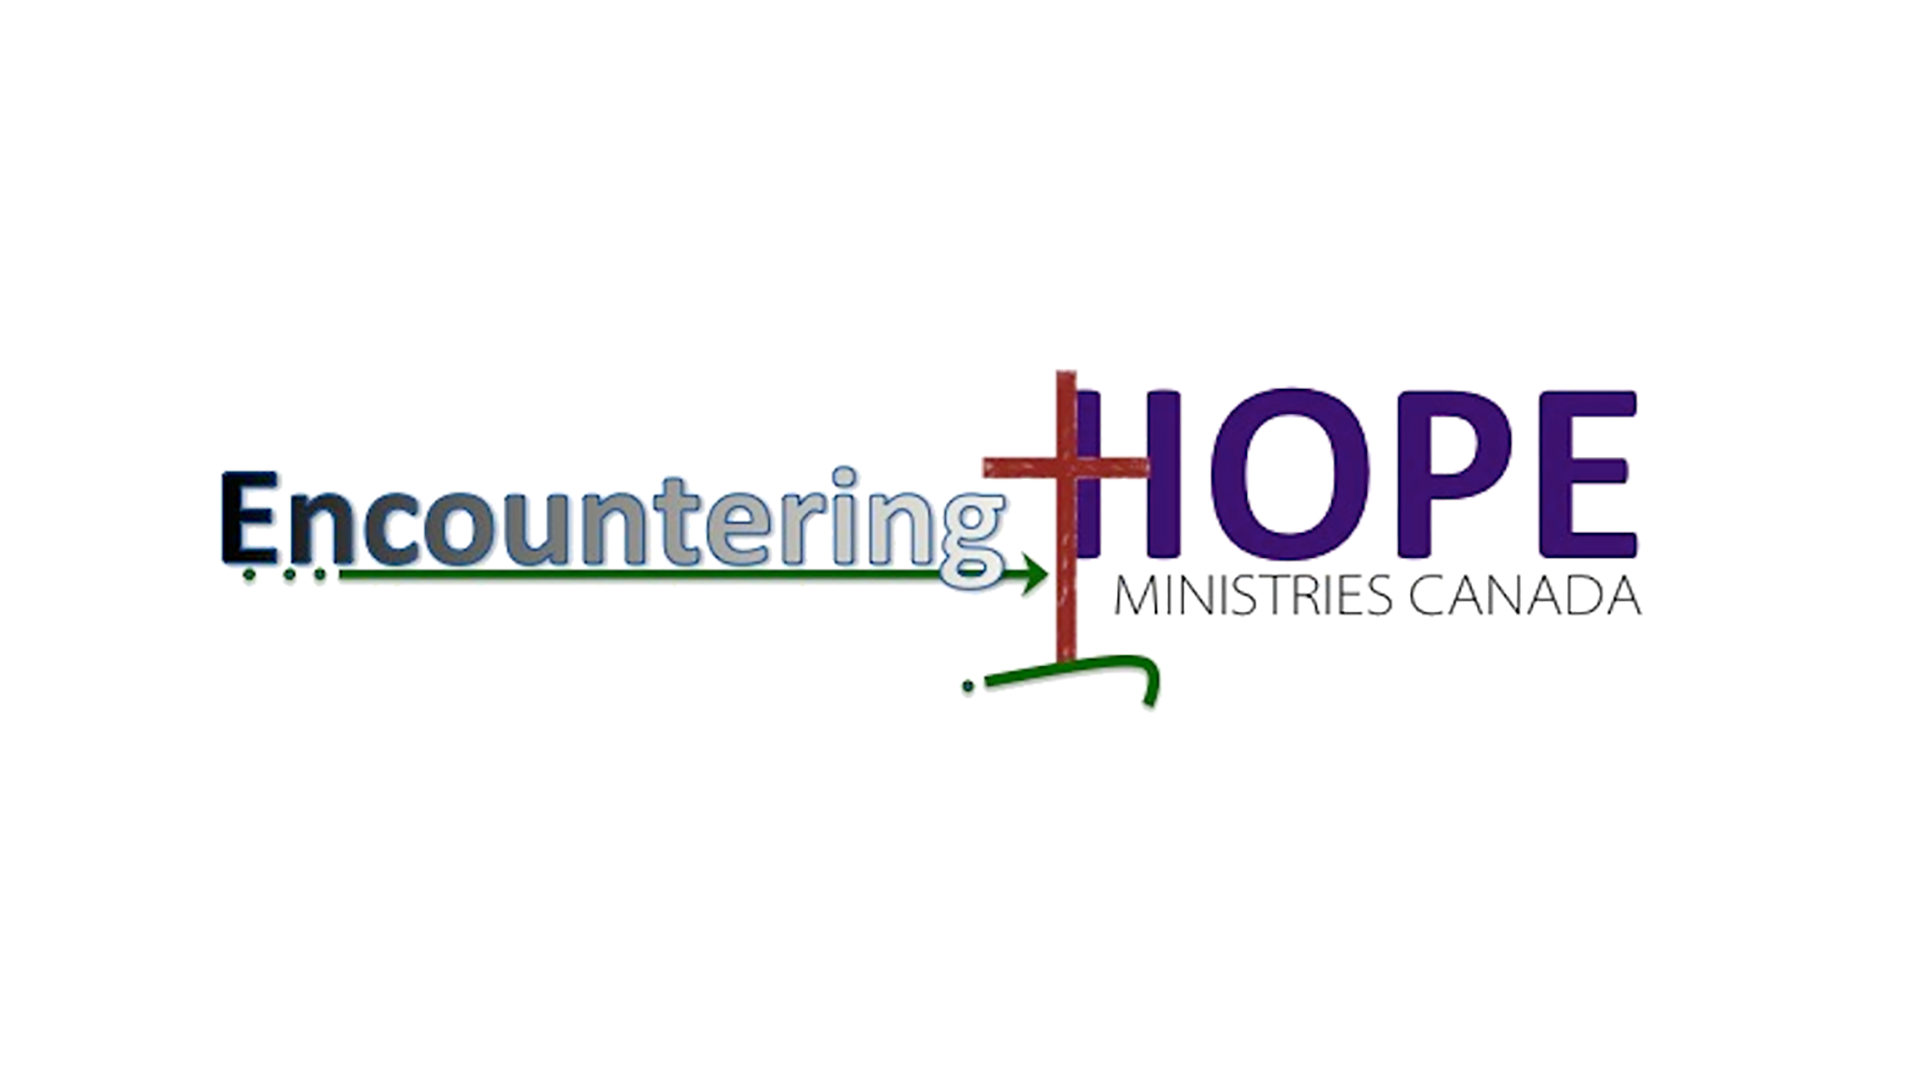 Encountering Hope Ministries Canada logo